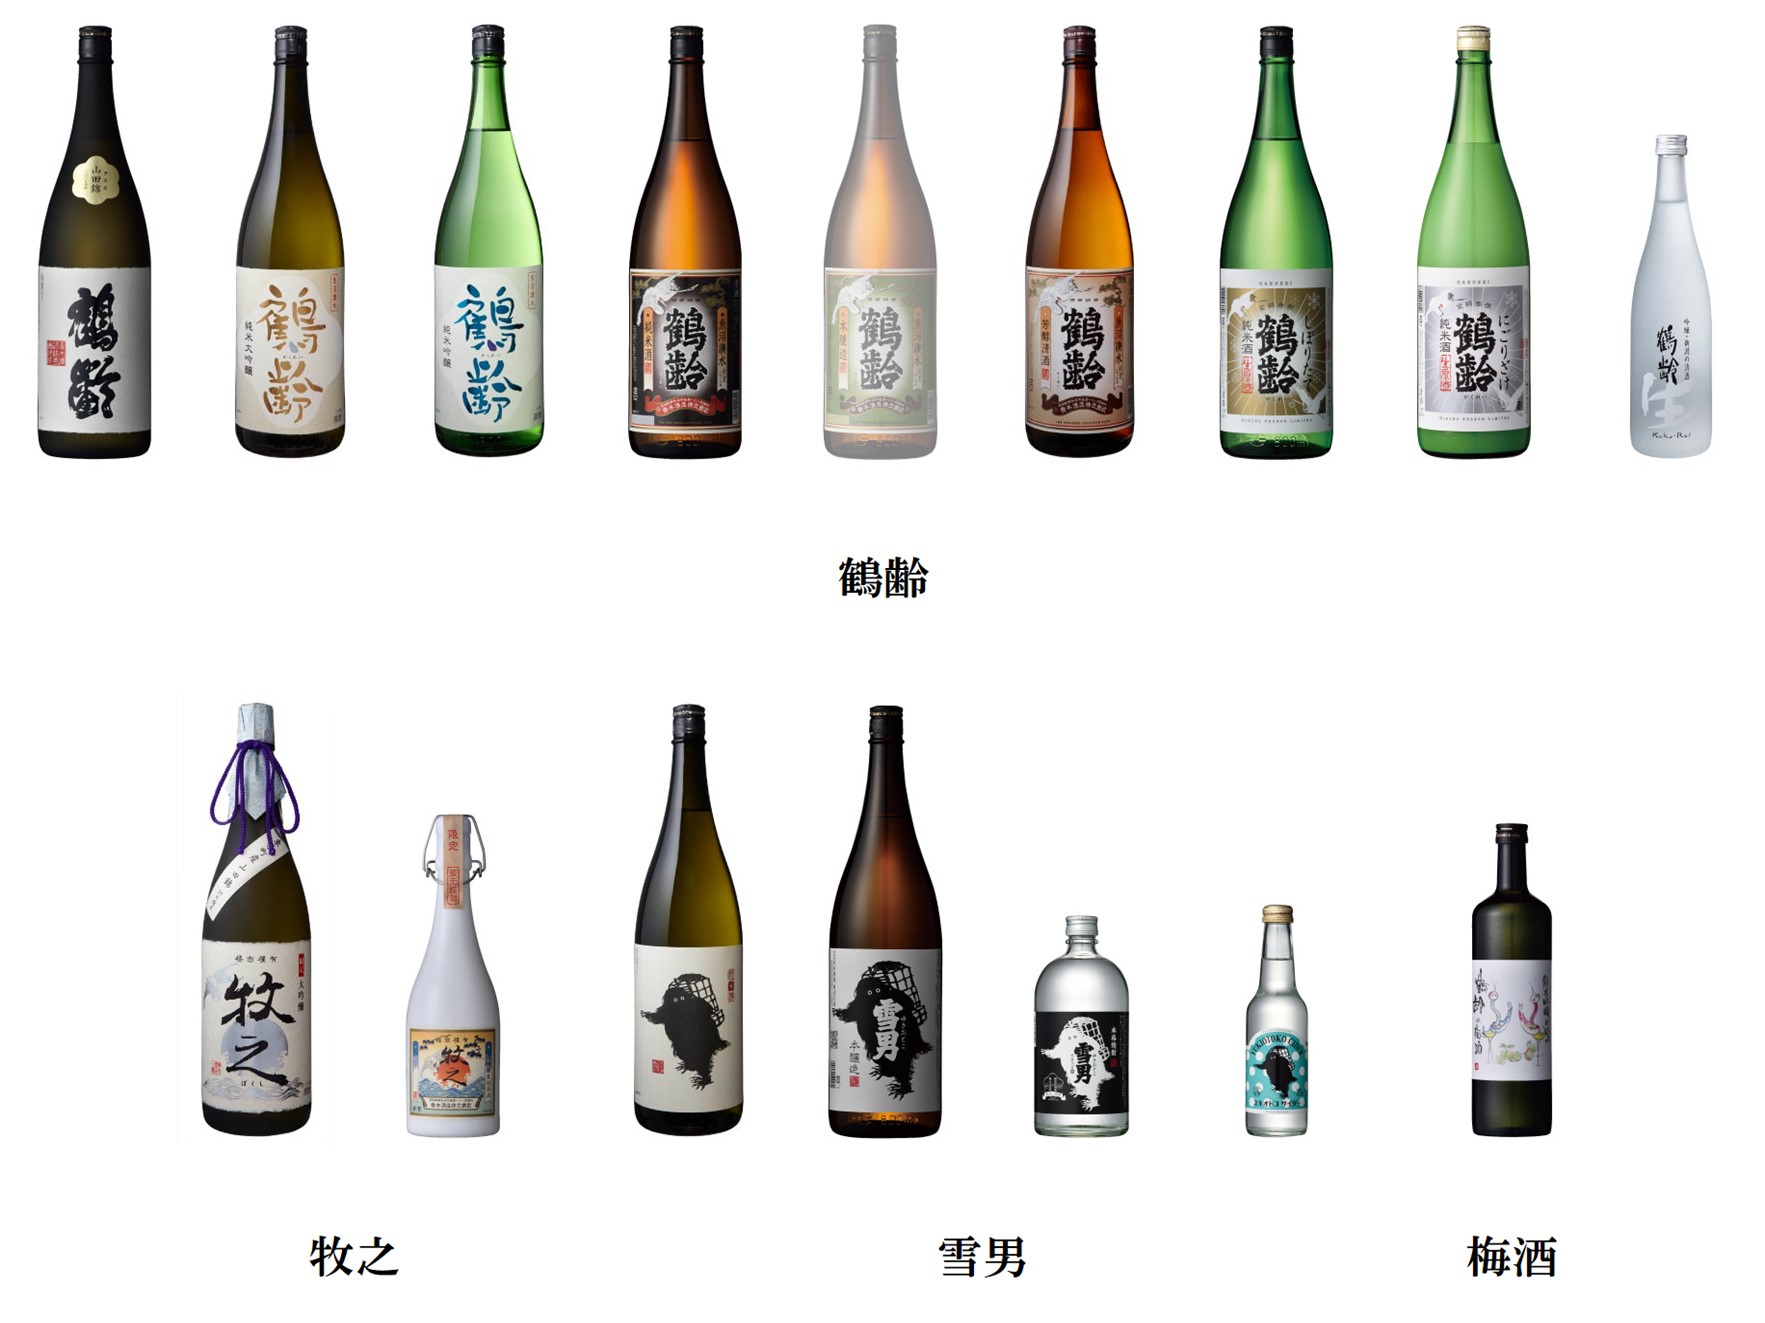 What kind of sake brand is Kakurei? 鶴齢